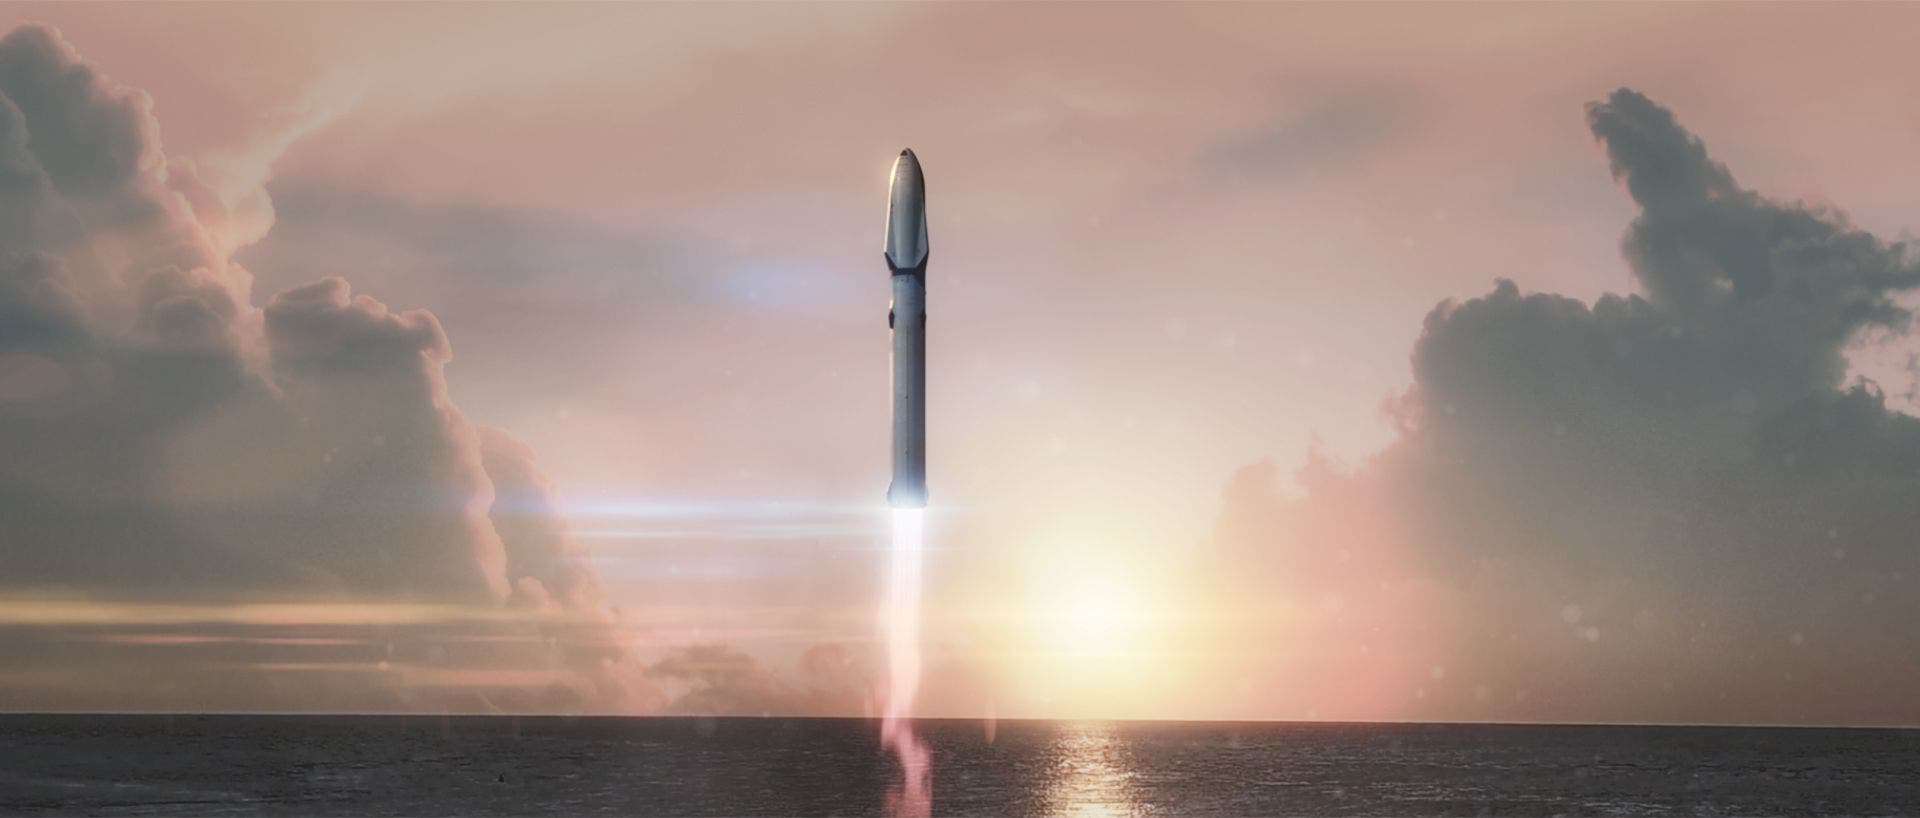 Artist illustation of BFT taking off. Credit: SpaceX.